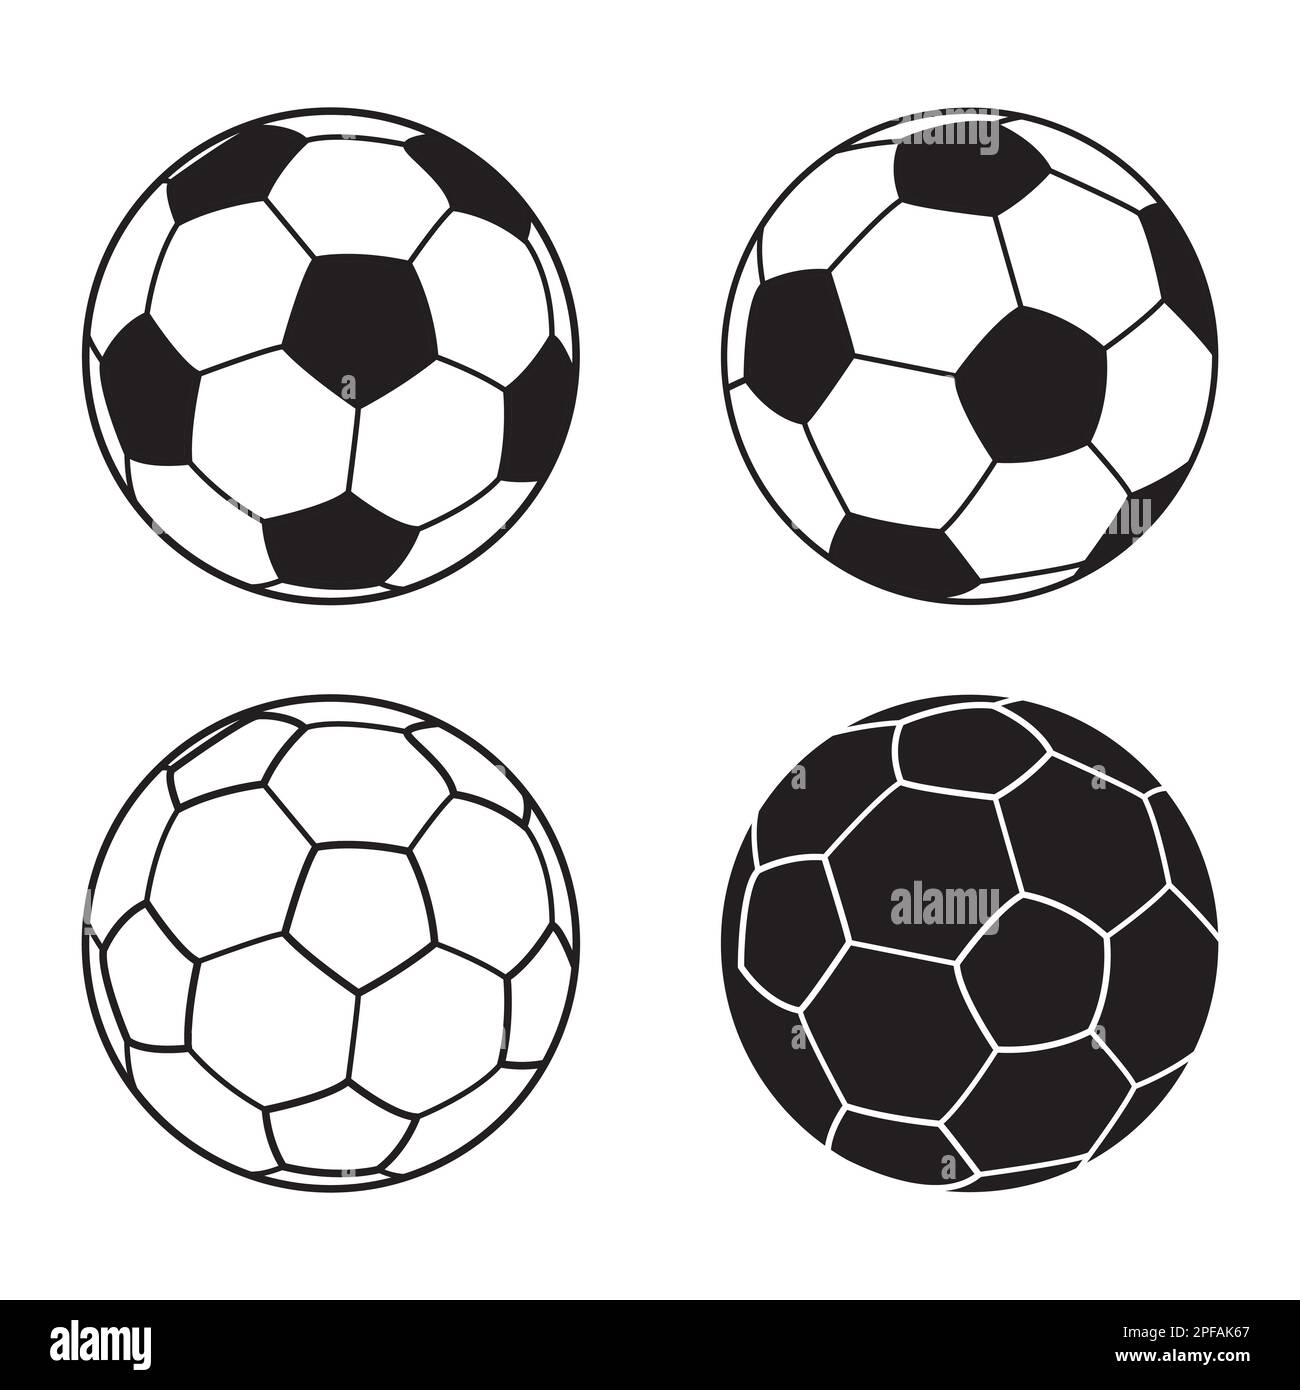 Balon futbol imágenes de stock de arte vectorial